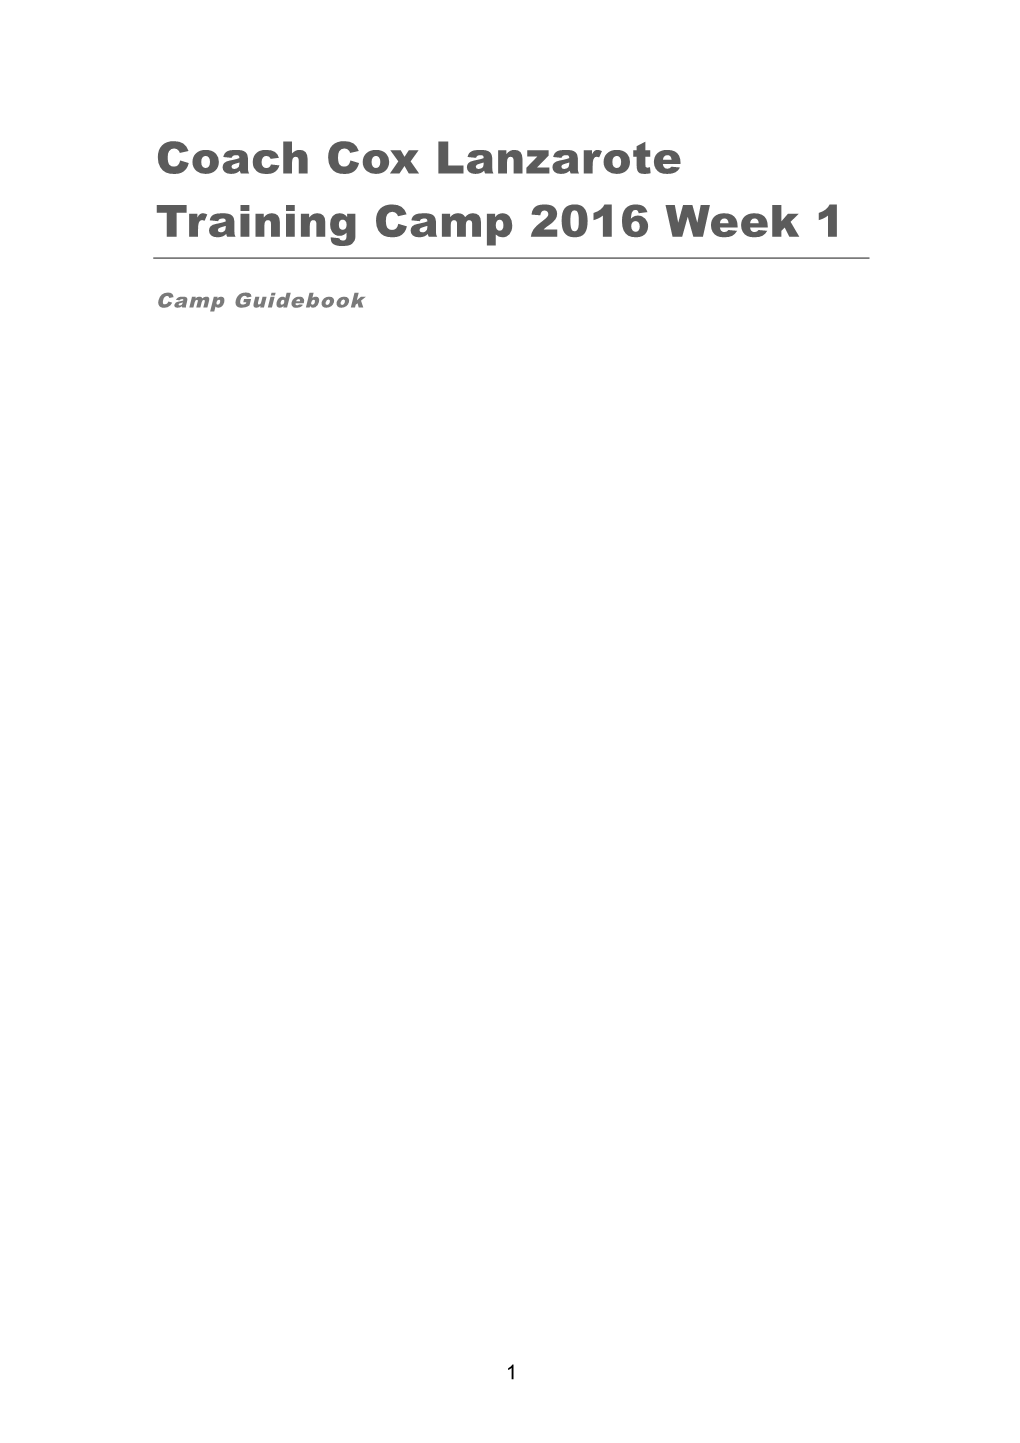 Coach Cox Lanzarote Training Camp 2016 Week 1